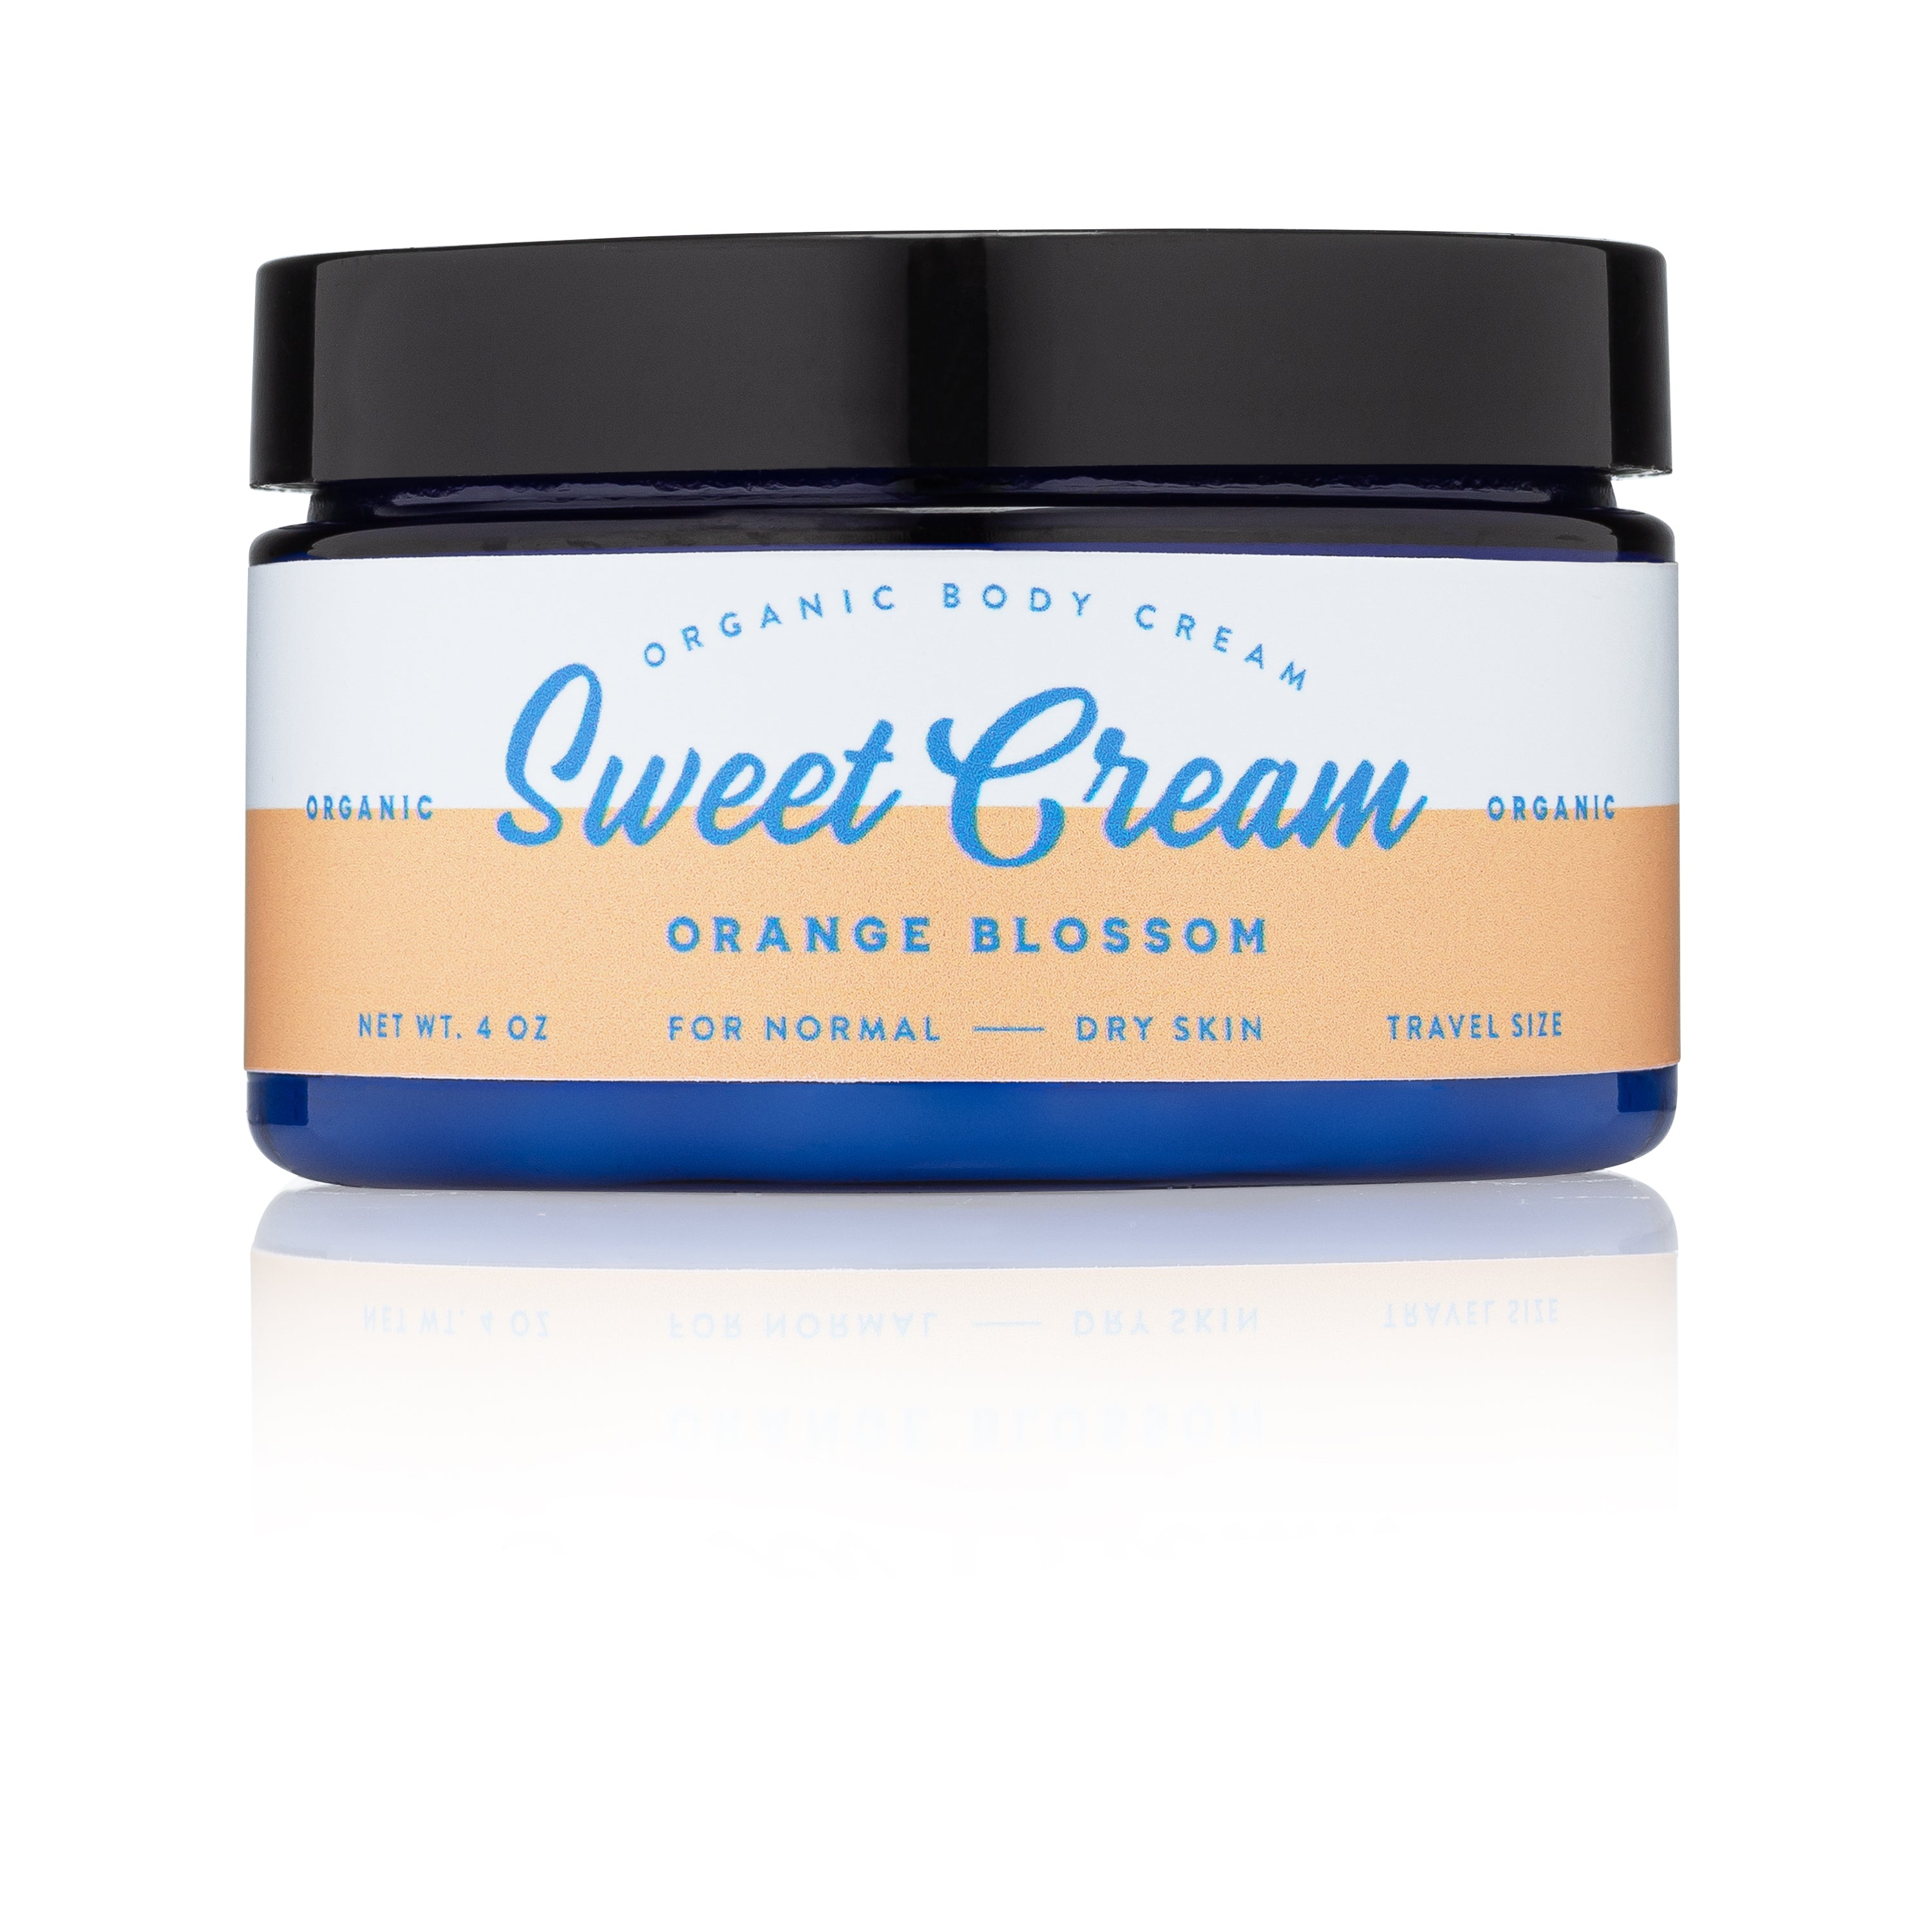 Sweet Cream Orange Blossom body cream